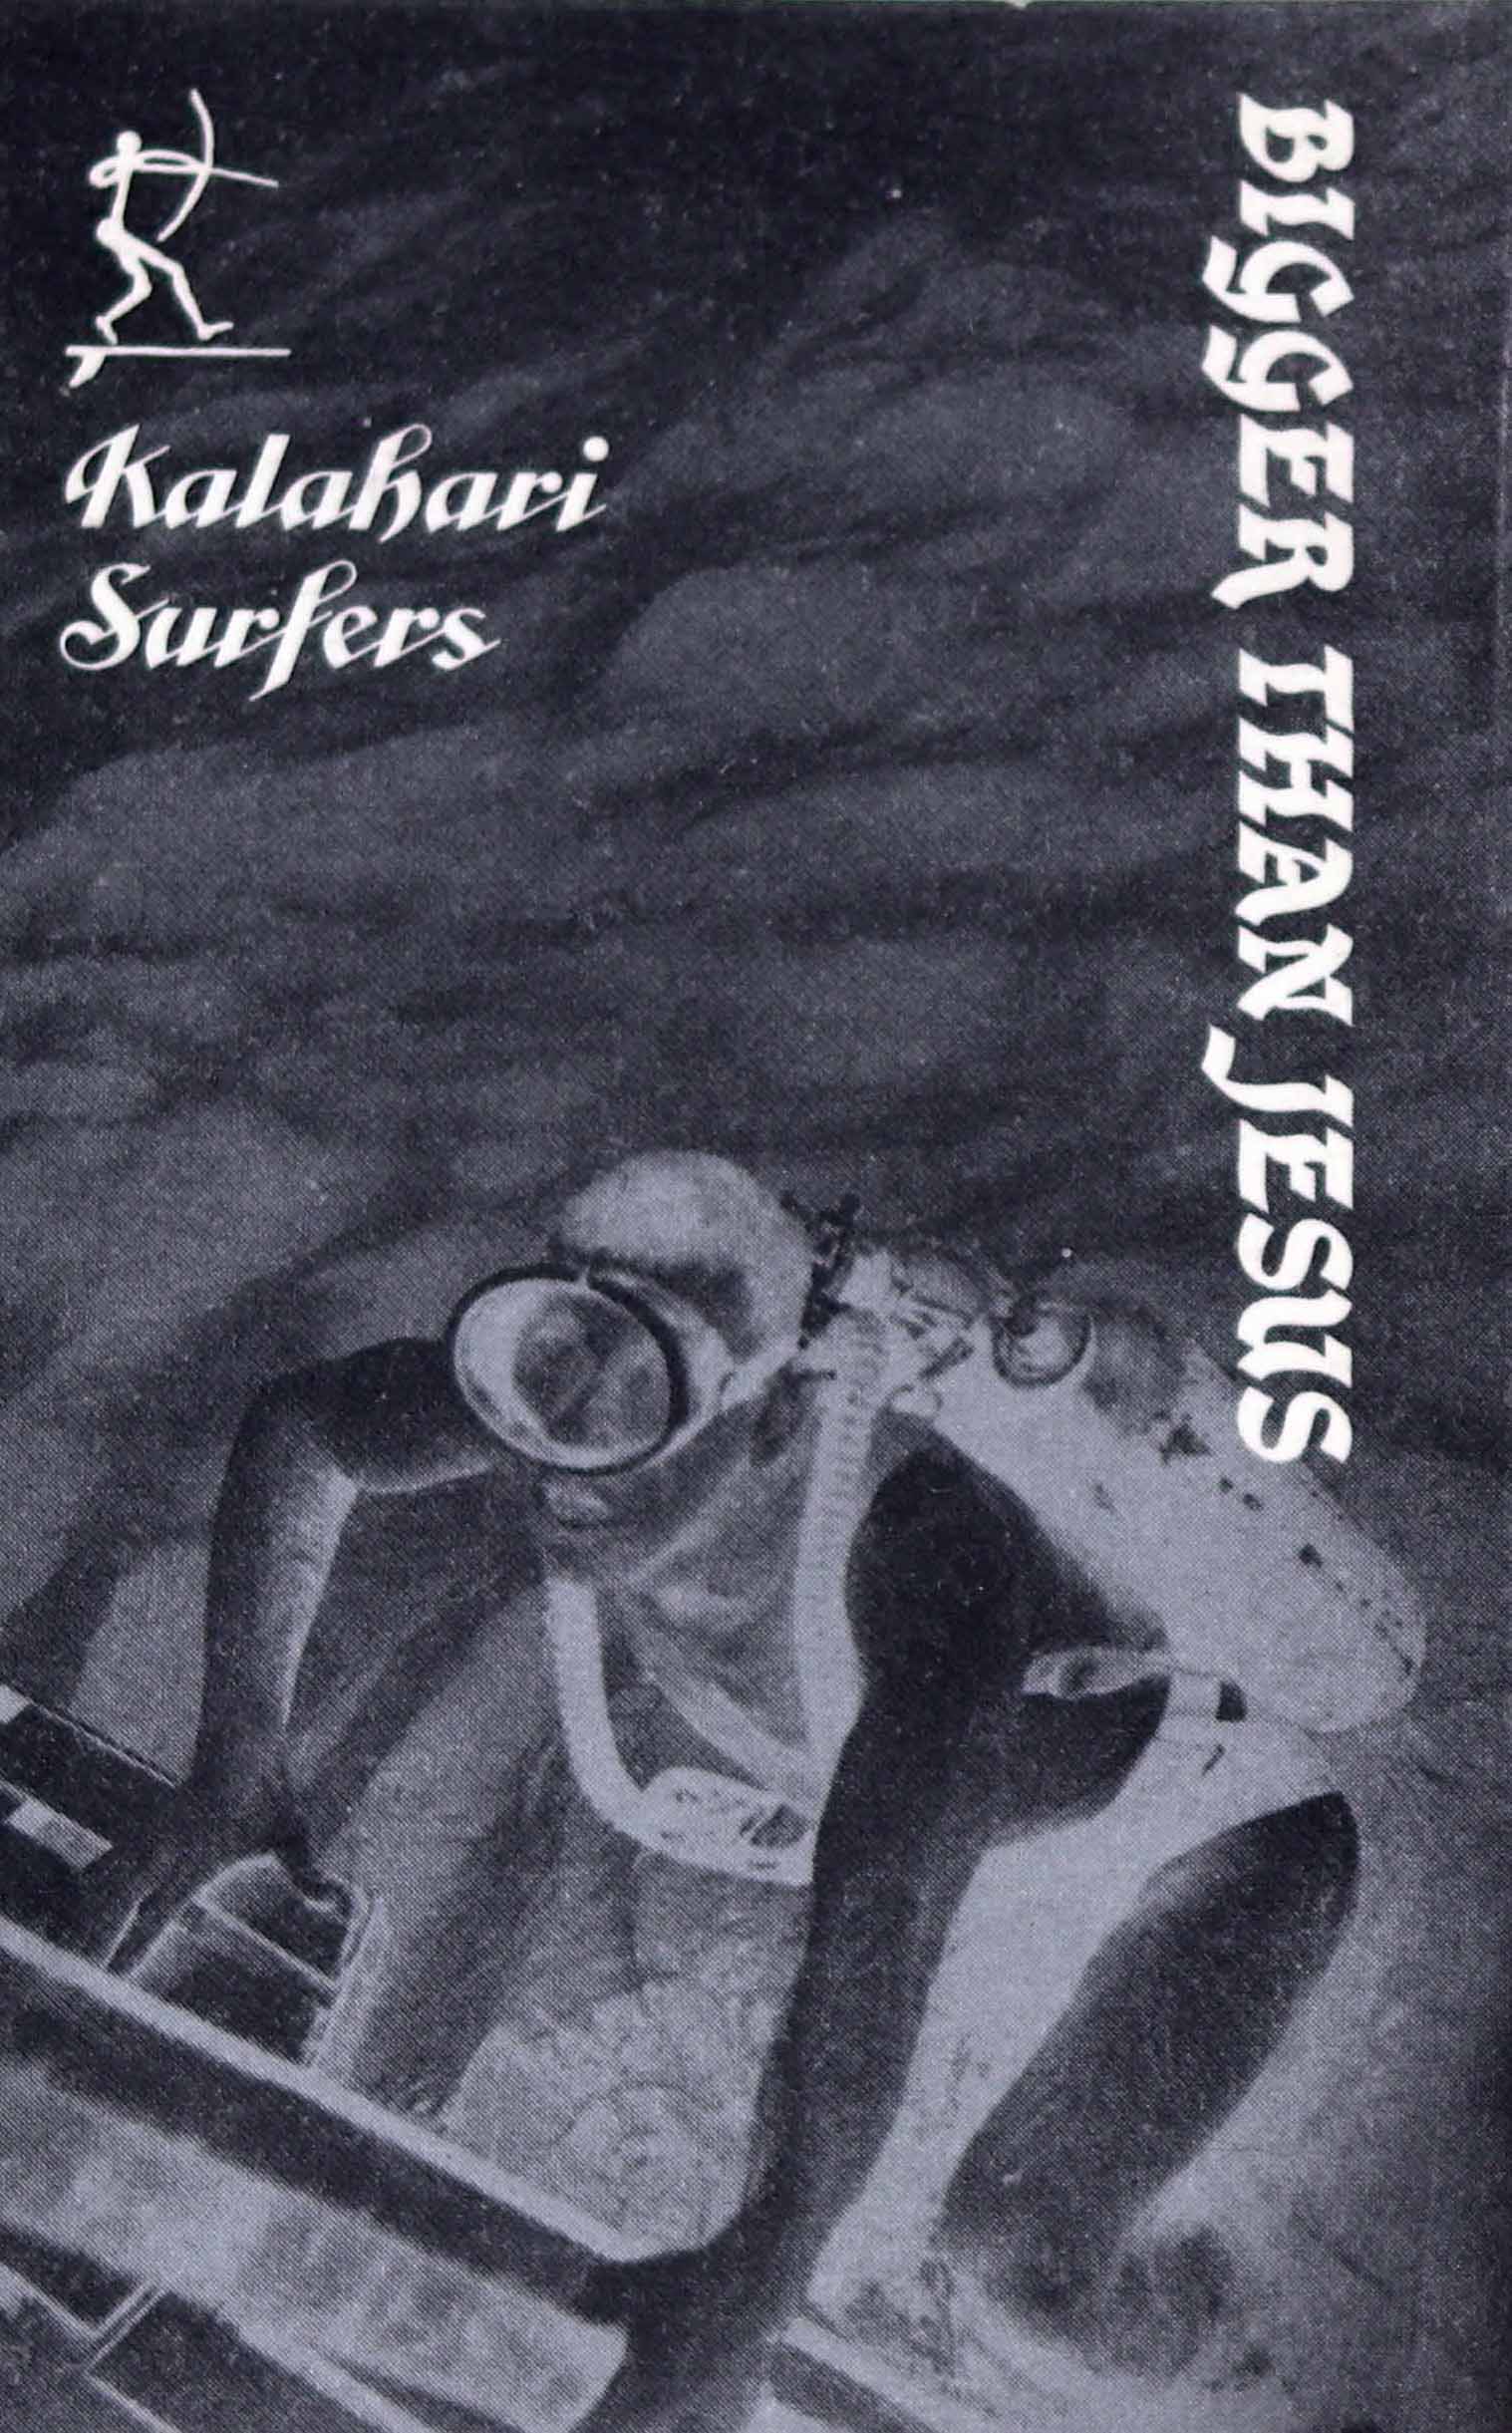 Kalahari Surfers – Bigger Than Jesus (cassette, 1989)